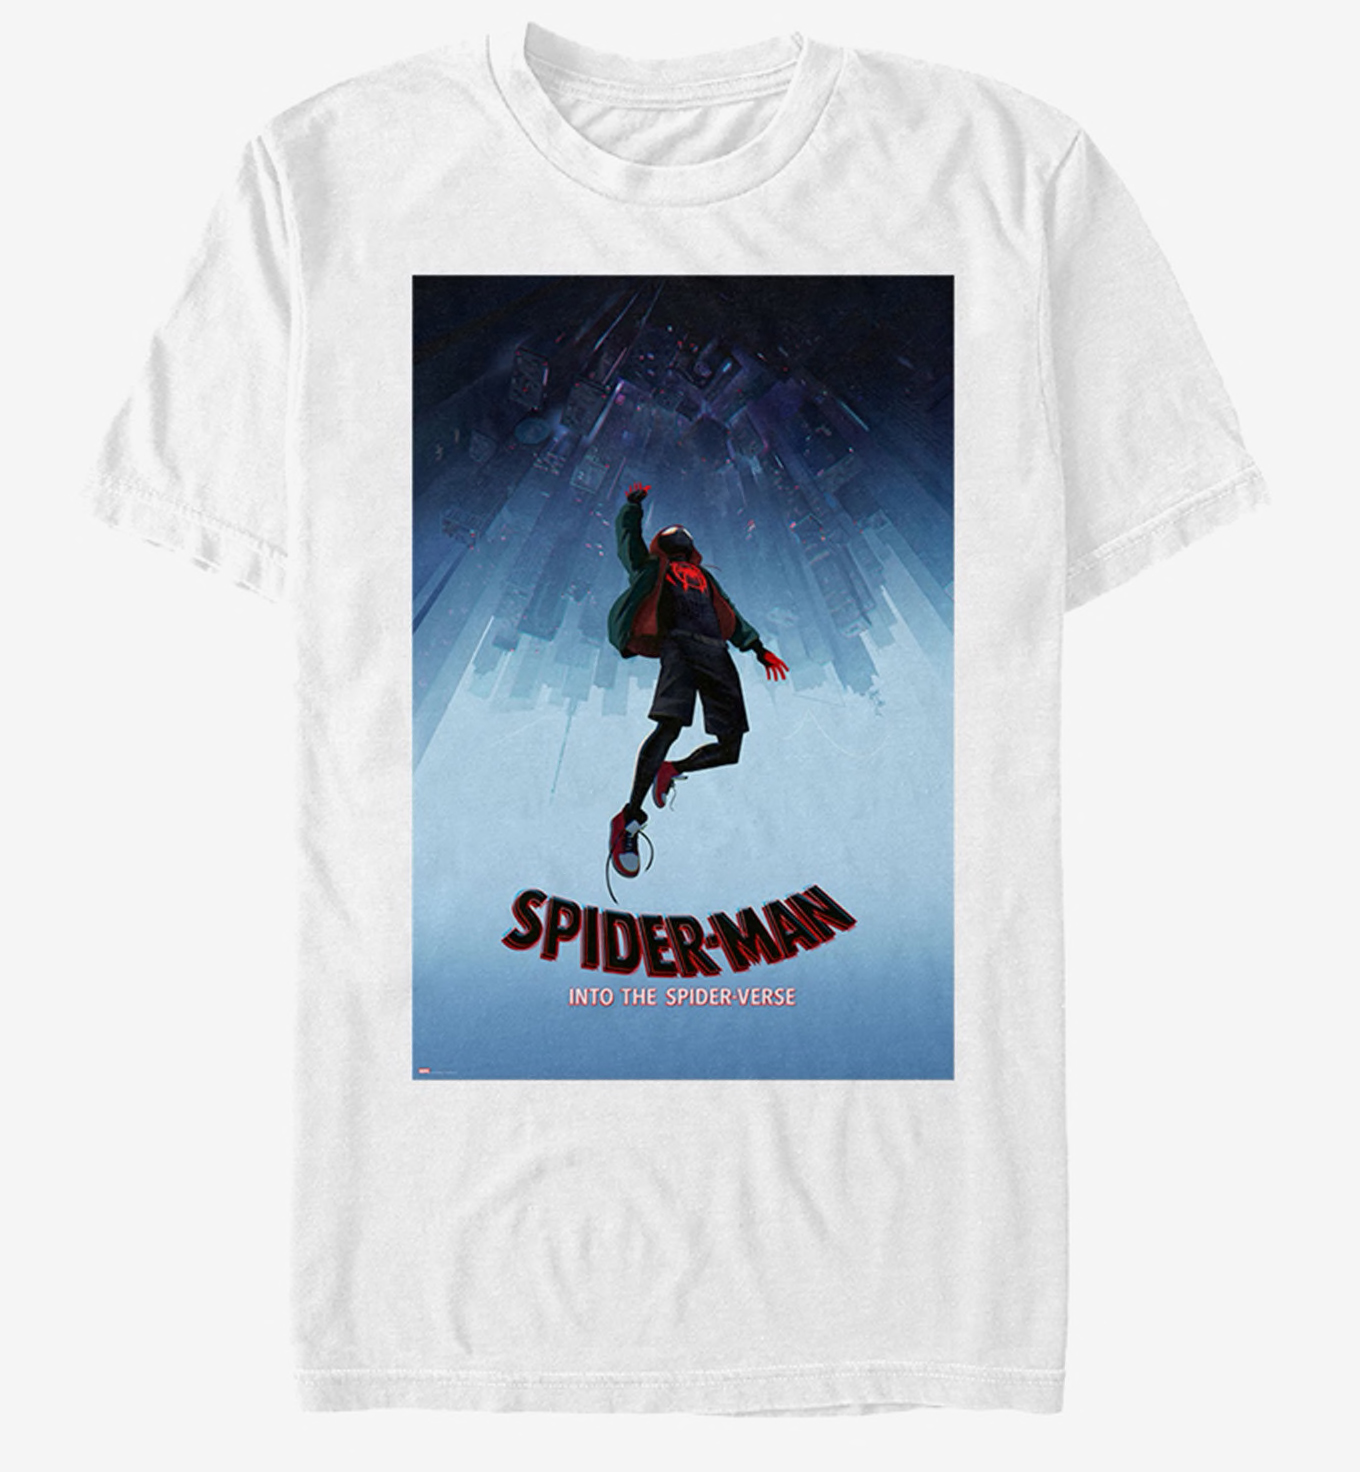 spiderman-spider-verse-shirt-match-jordan-1-origin-story-15